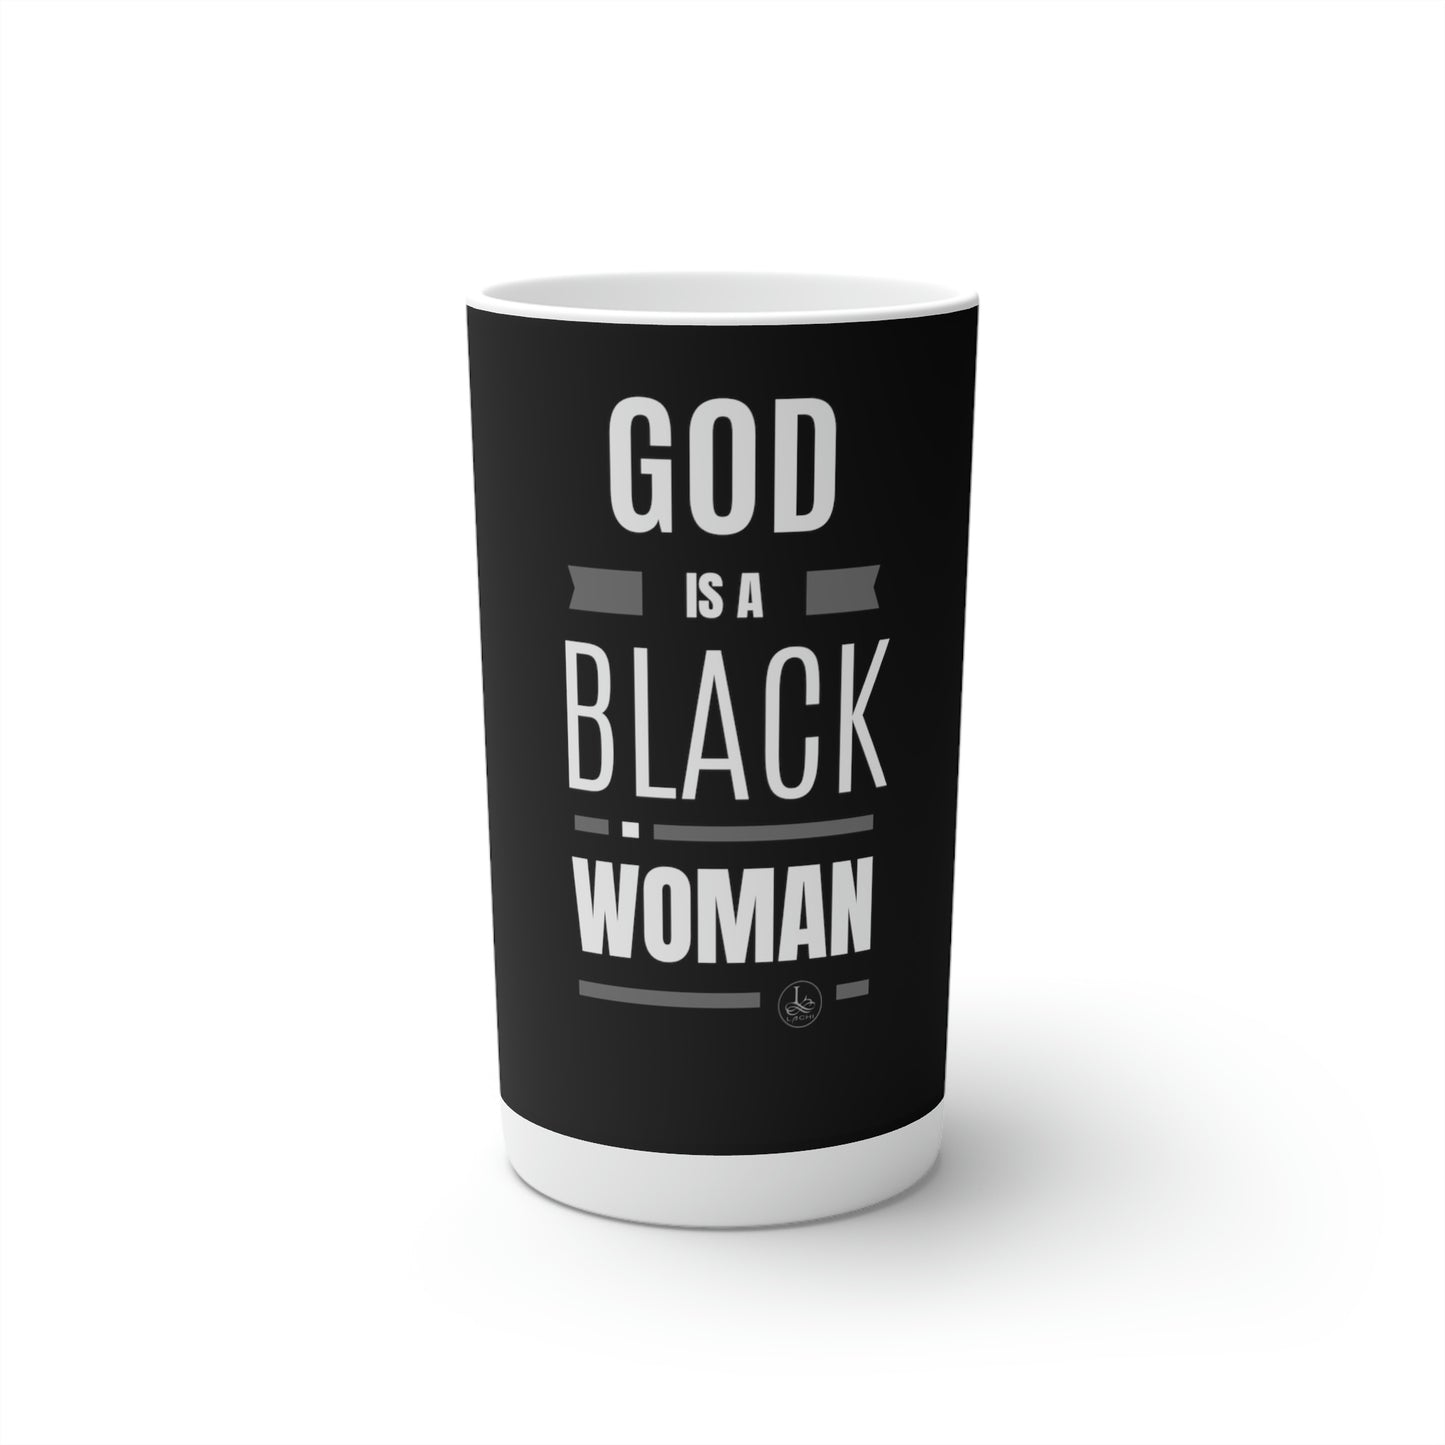 God is a Black Woman - Conical Coffee Mugs (3oz, 8oz, 12oz)